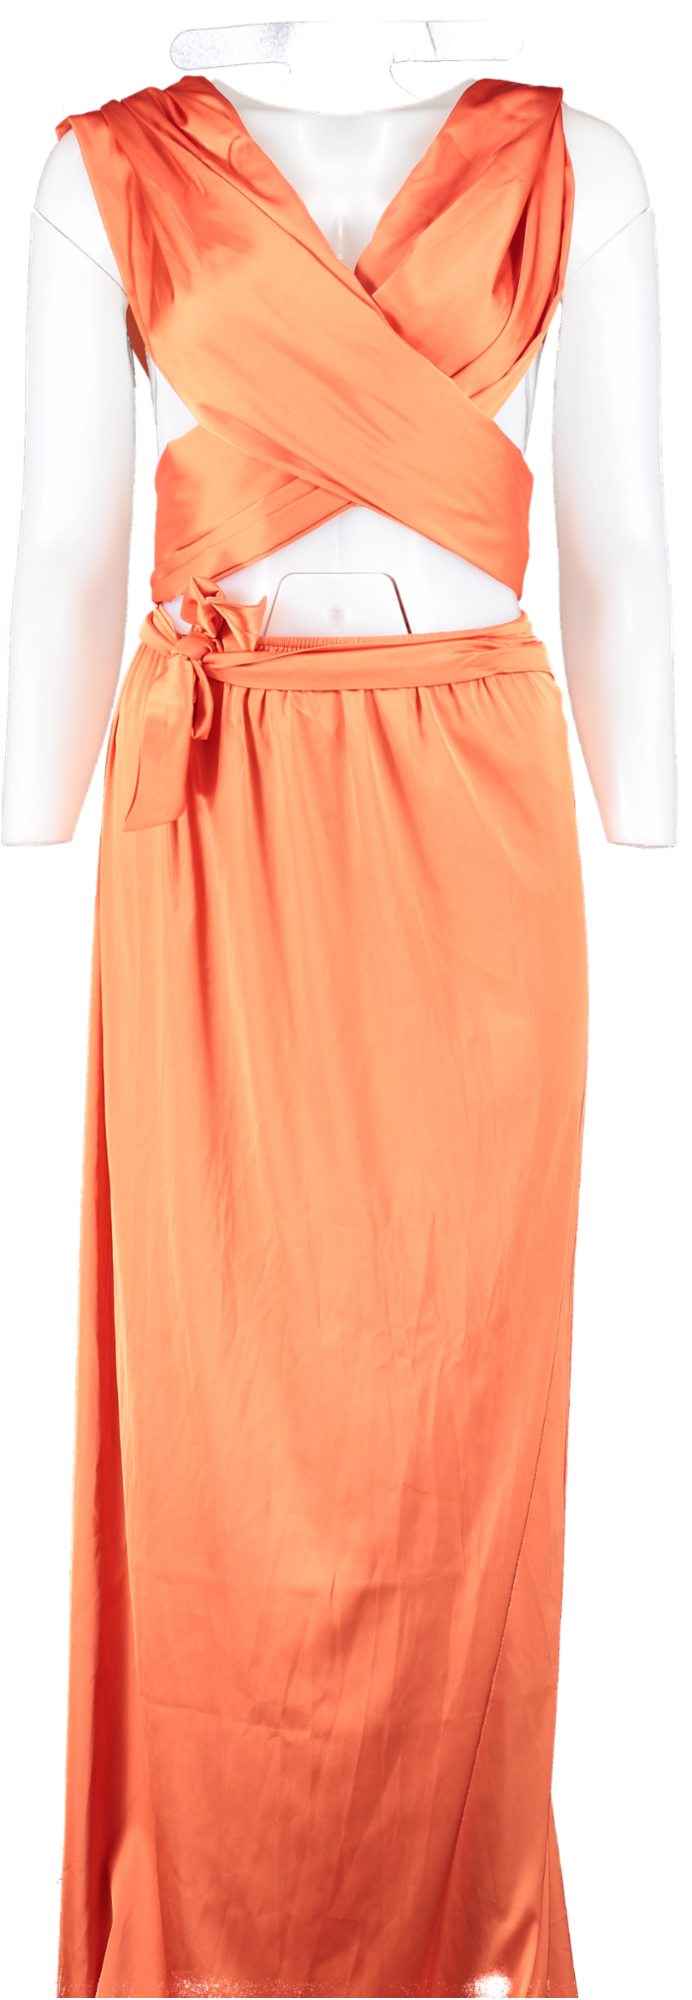 Chic Le Frique Orange Multi Use Top & Maxi Skirt Set UK S/M